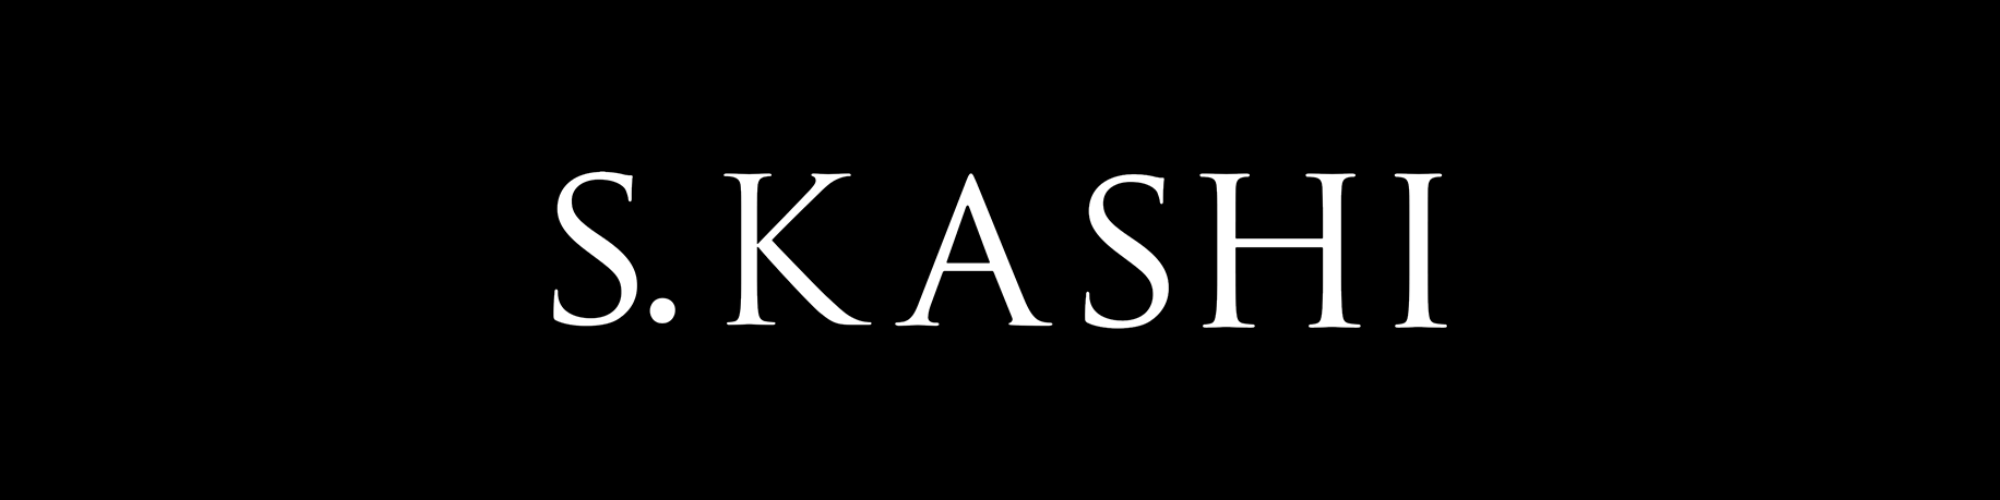 S Kashi & Sons